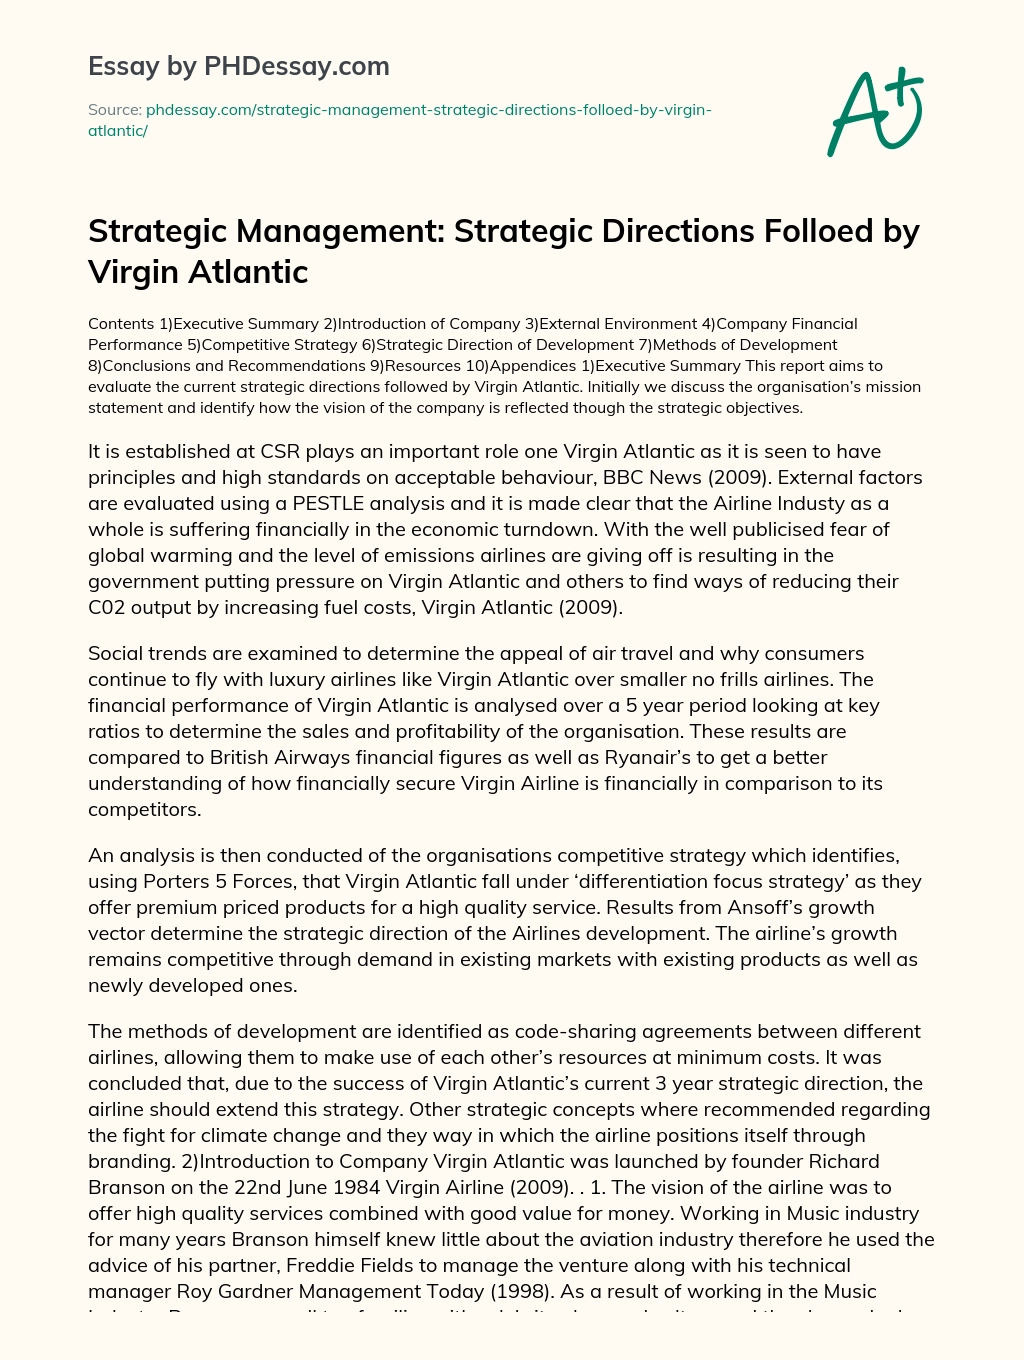 Strategic Management: Strategic Directions Folloed by Virgin Atlantic essay